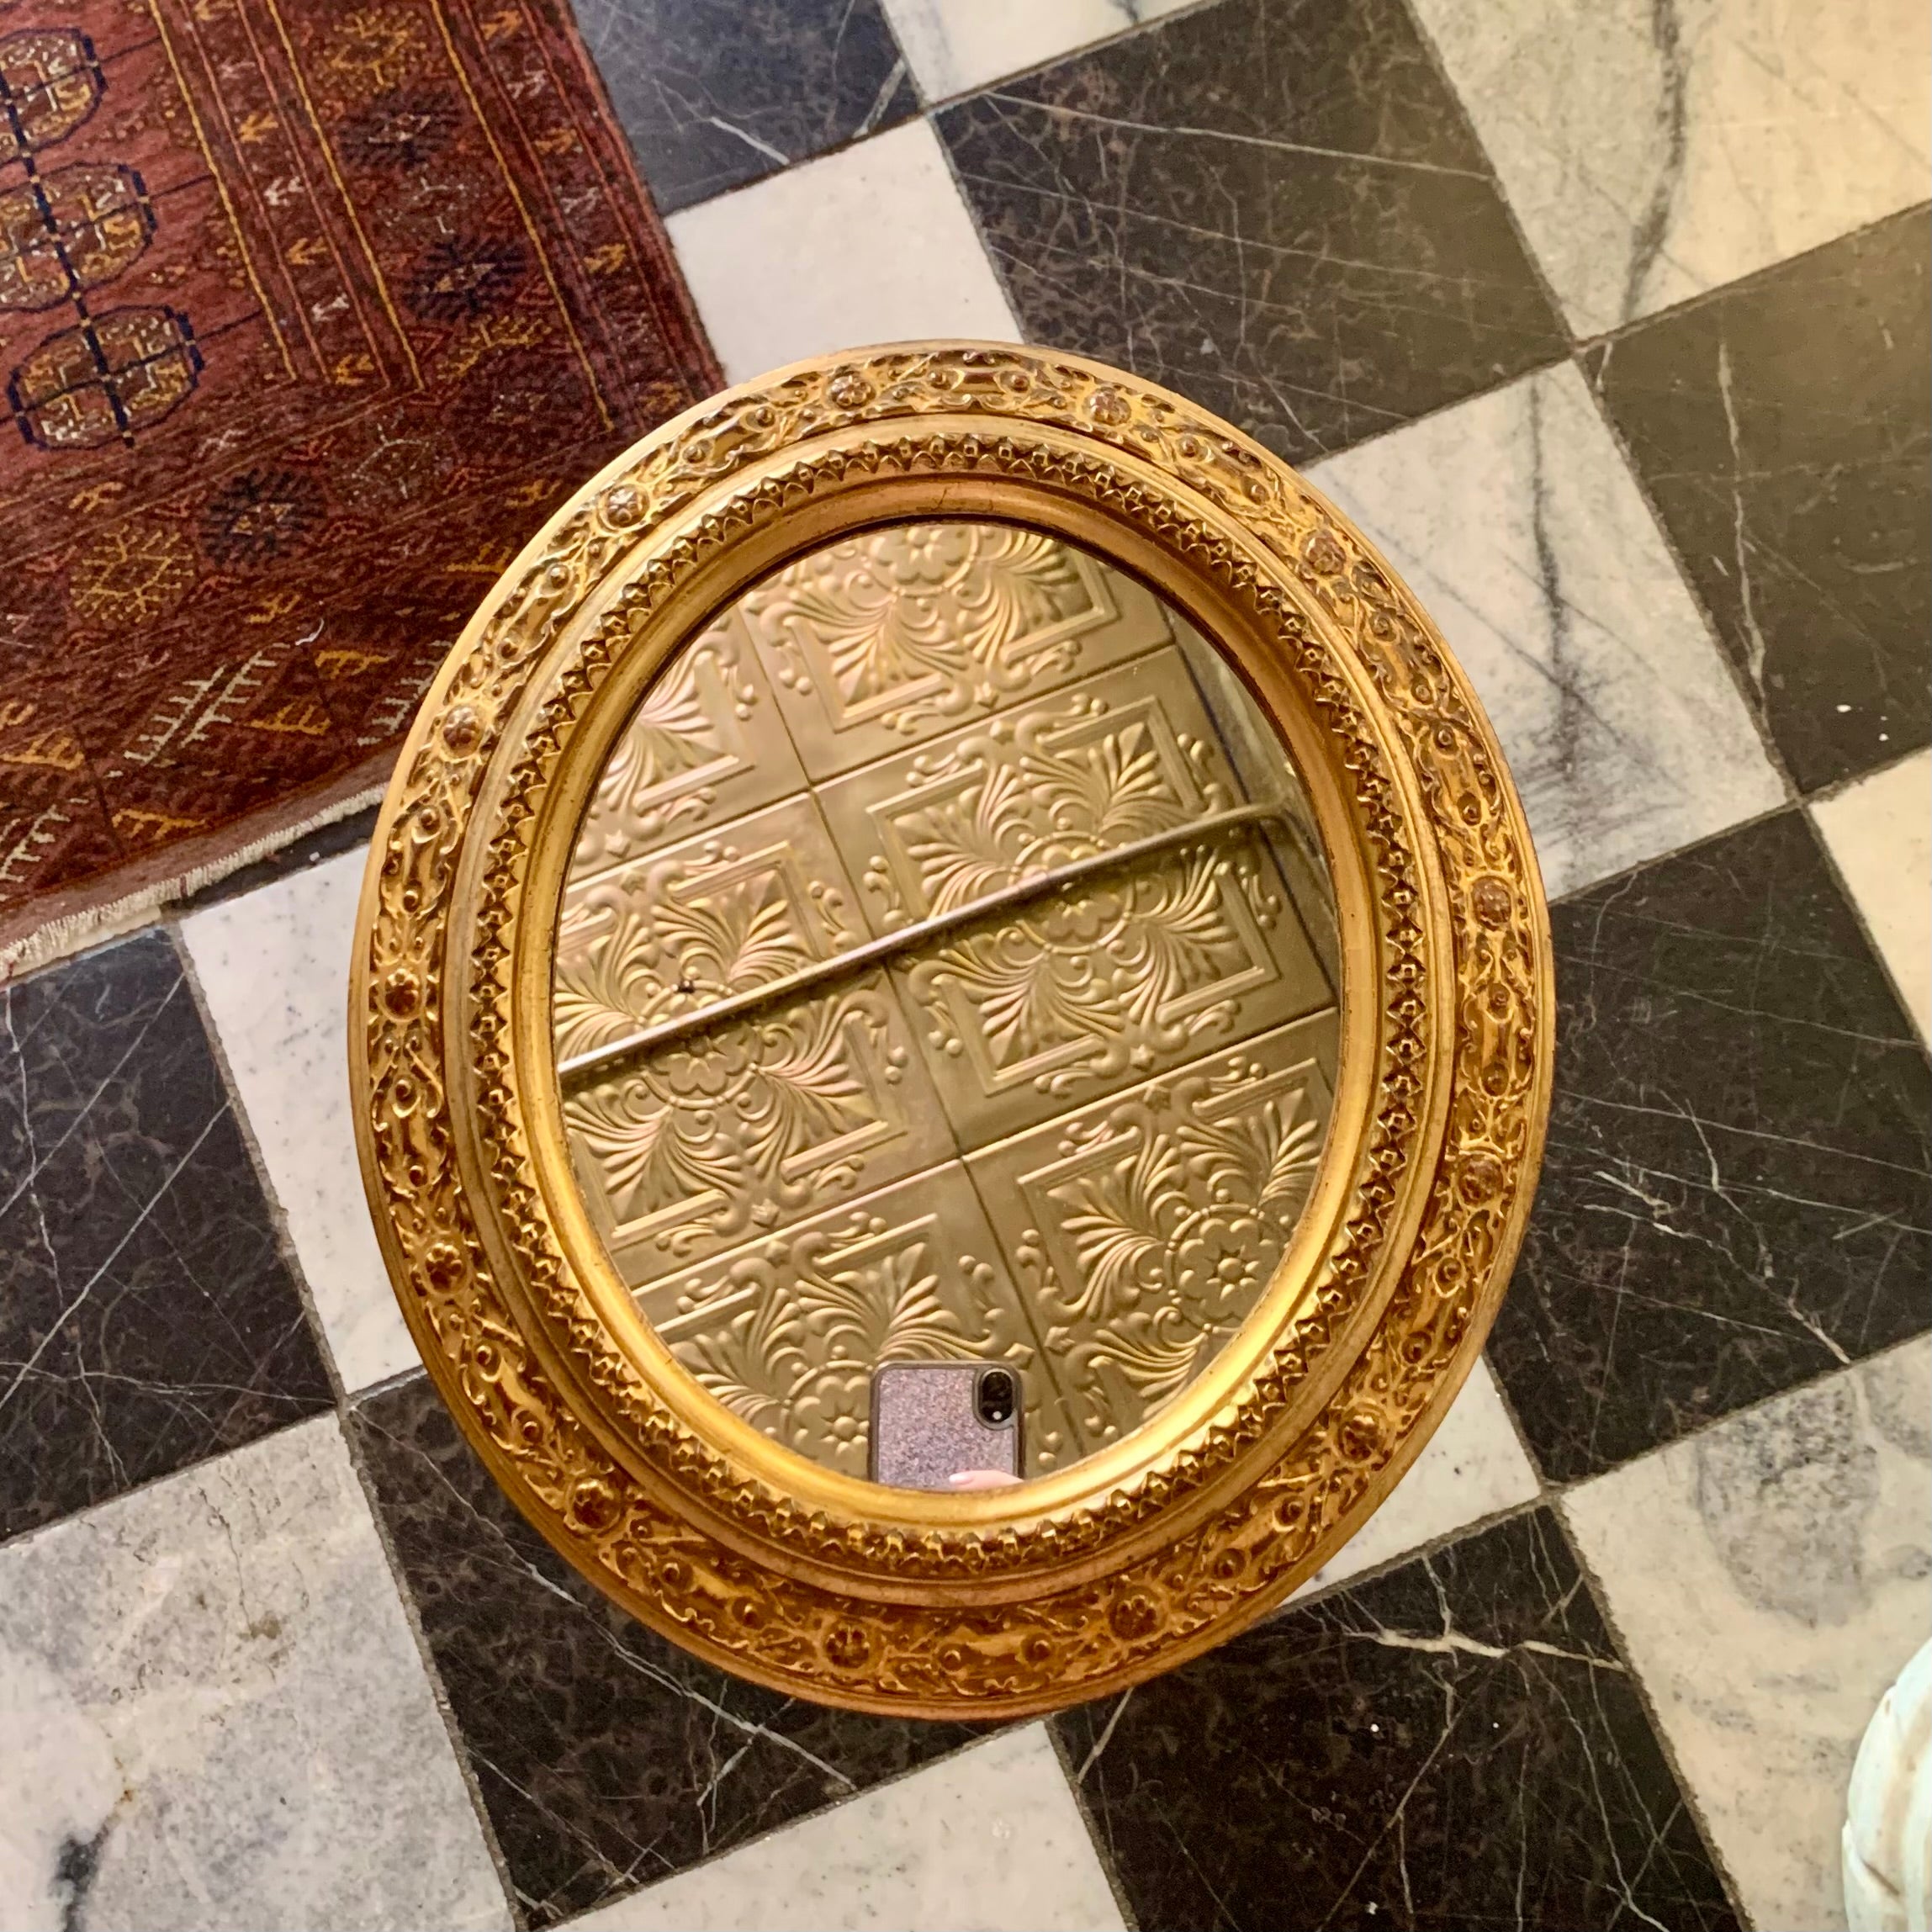 Pretty Antique Gilt Gold Mirror